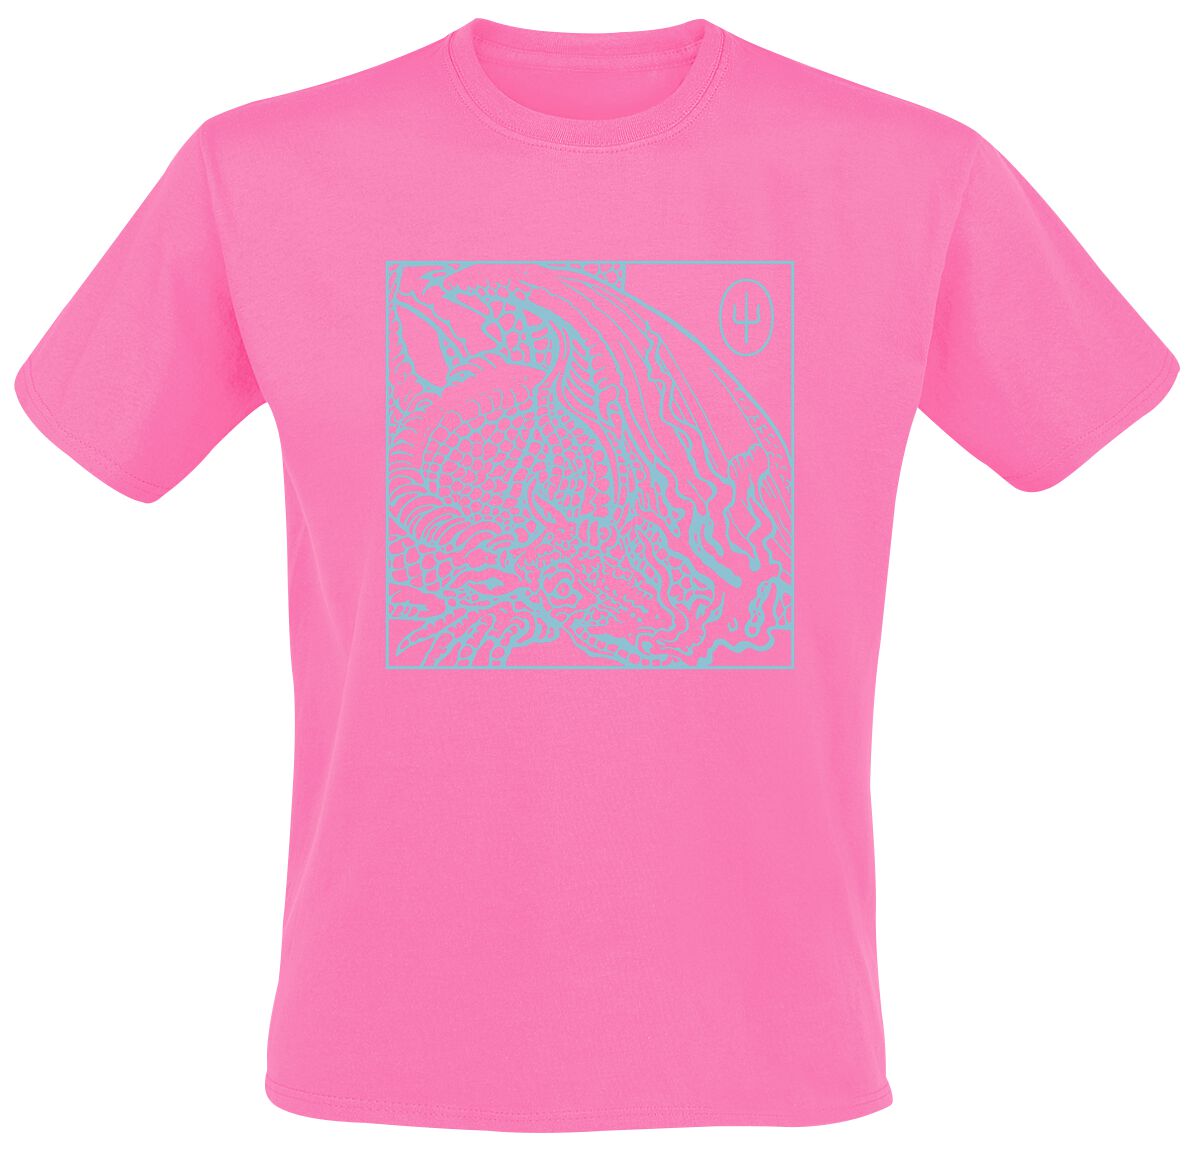 Twenty One Pilots Pink Dragon T-Shirt pink